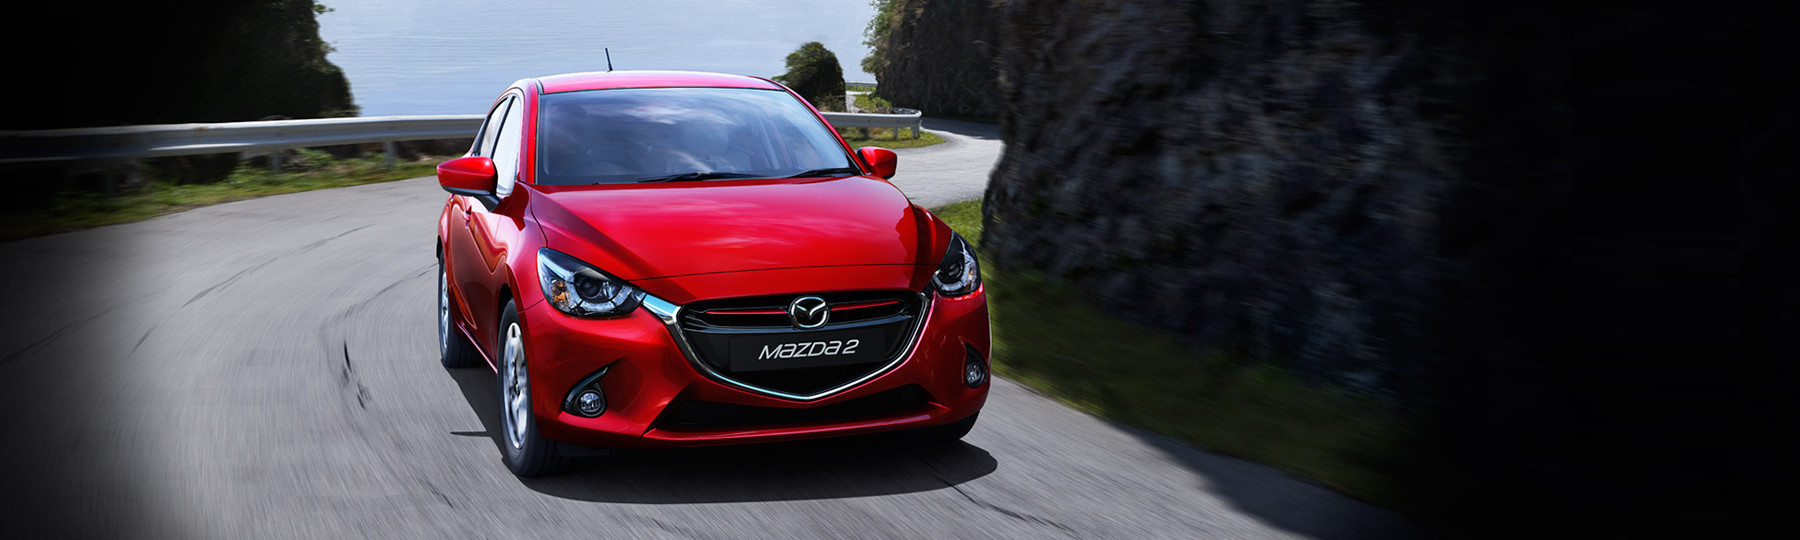 Mazda2 banner image